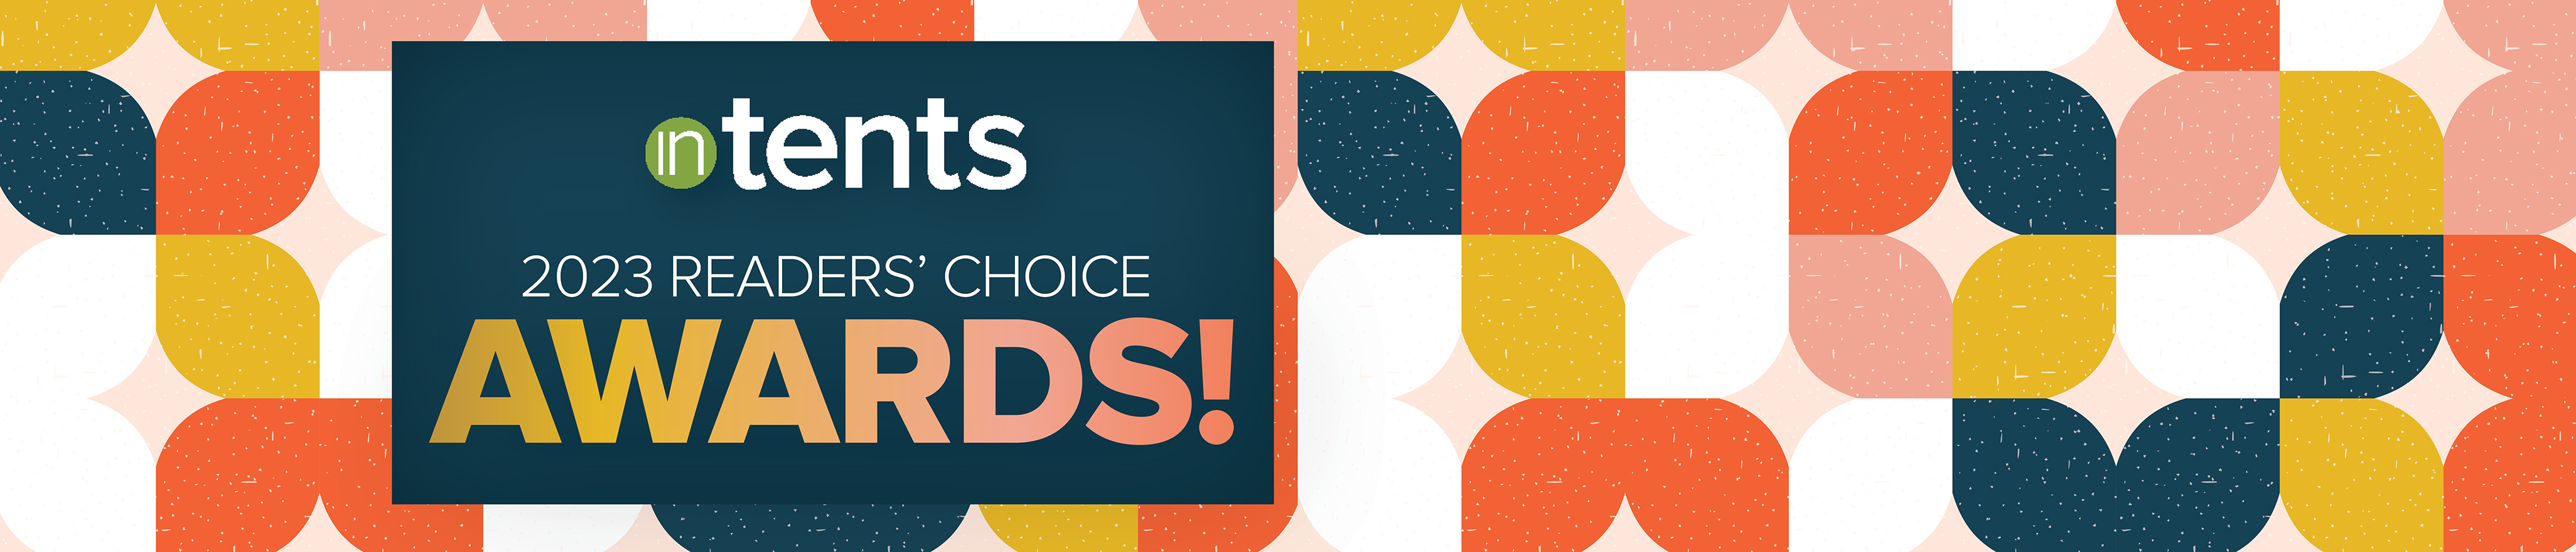 Readers’ Choice Awards 2023 – InTents